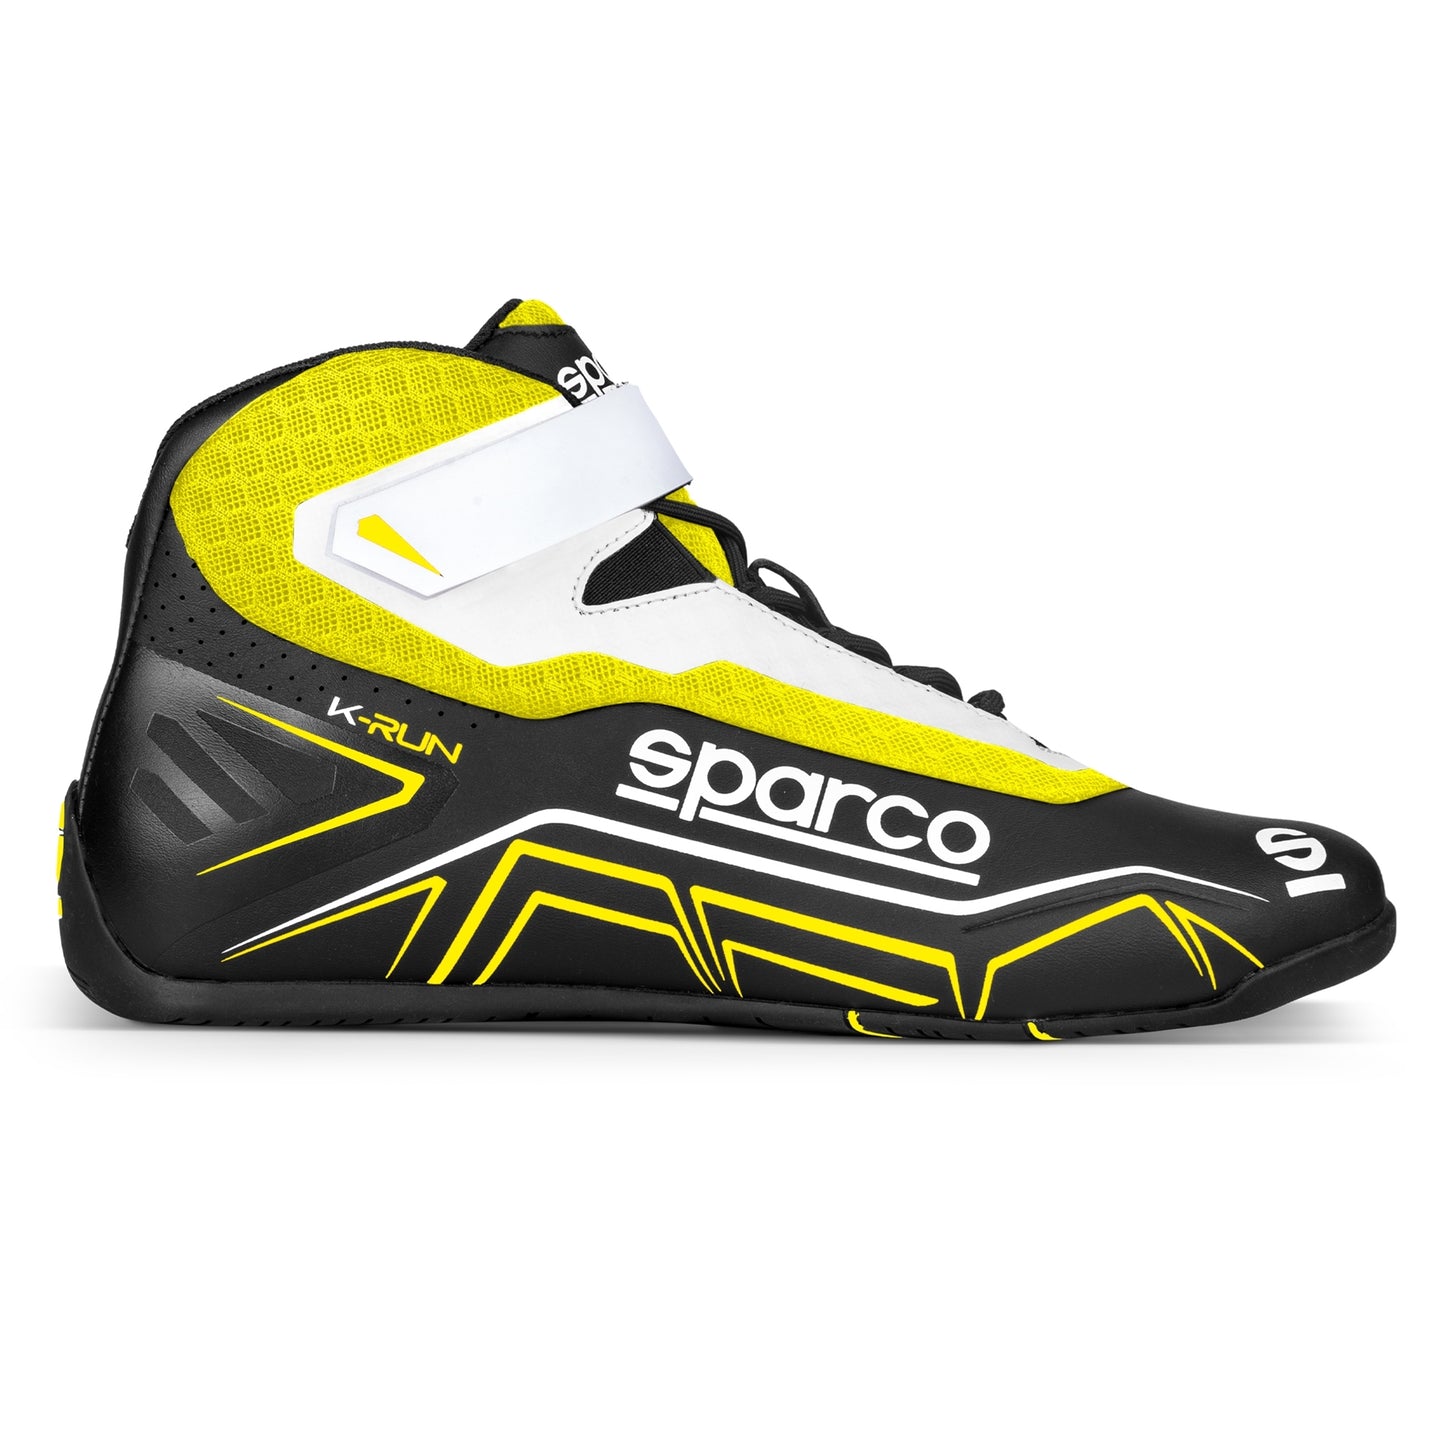 Sparco K-Run lightweight karting shoes